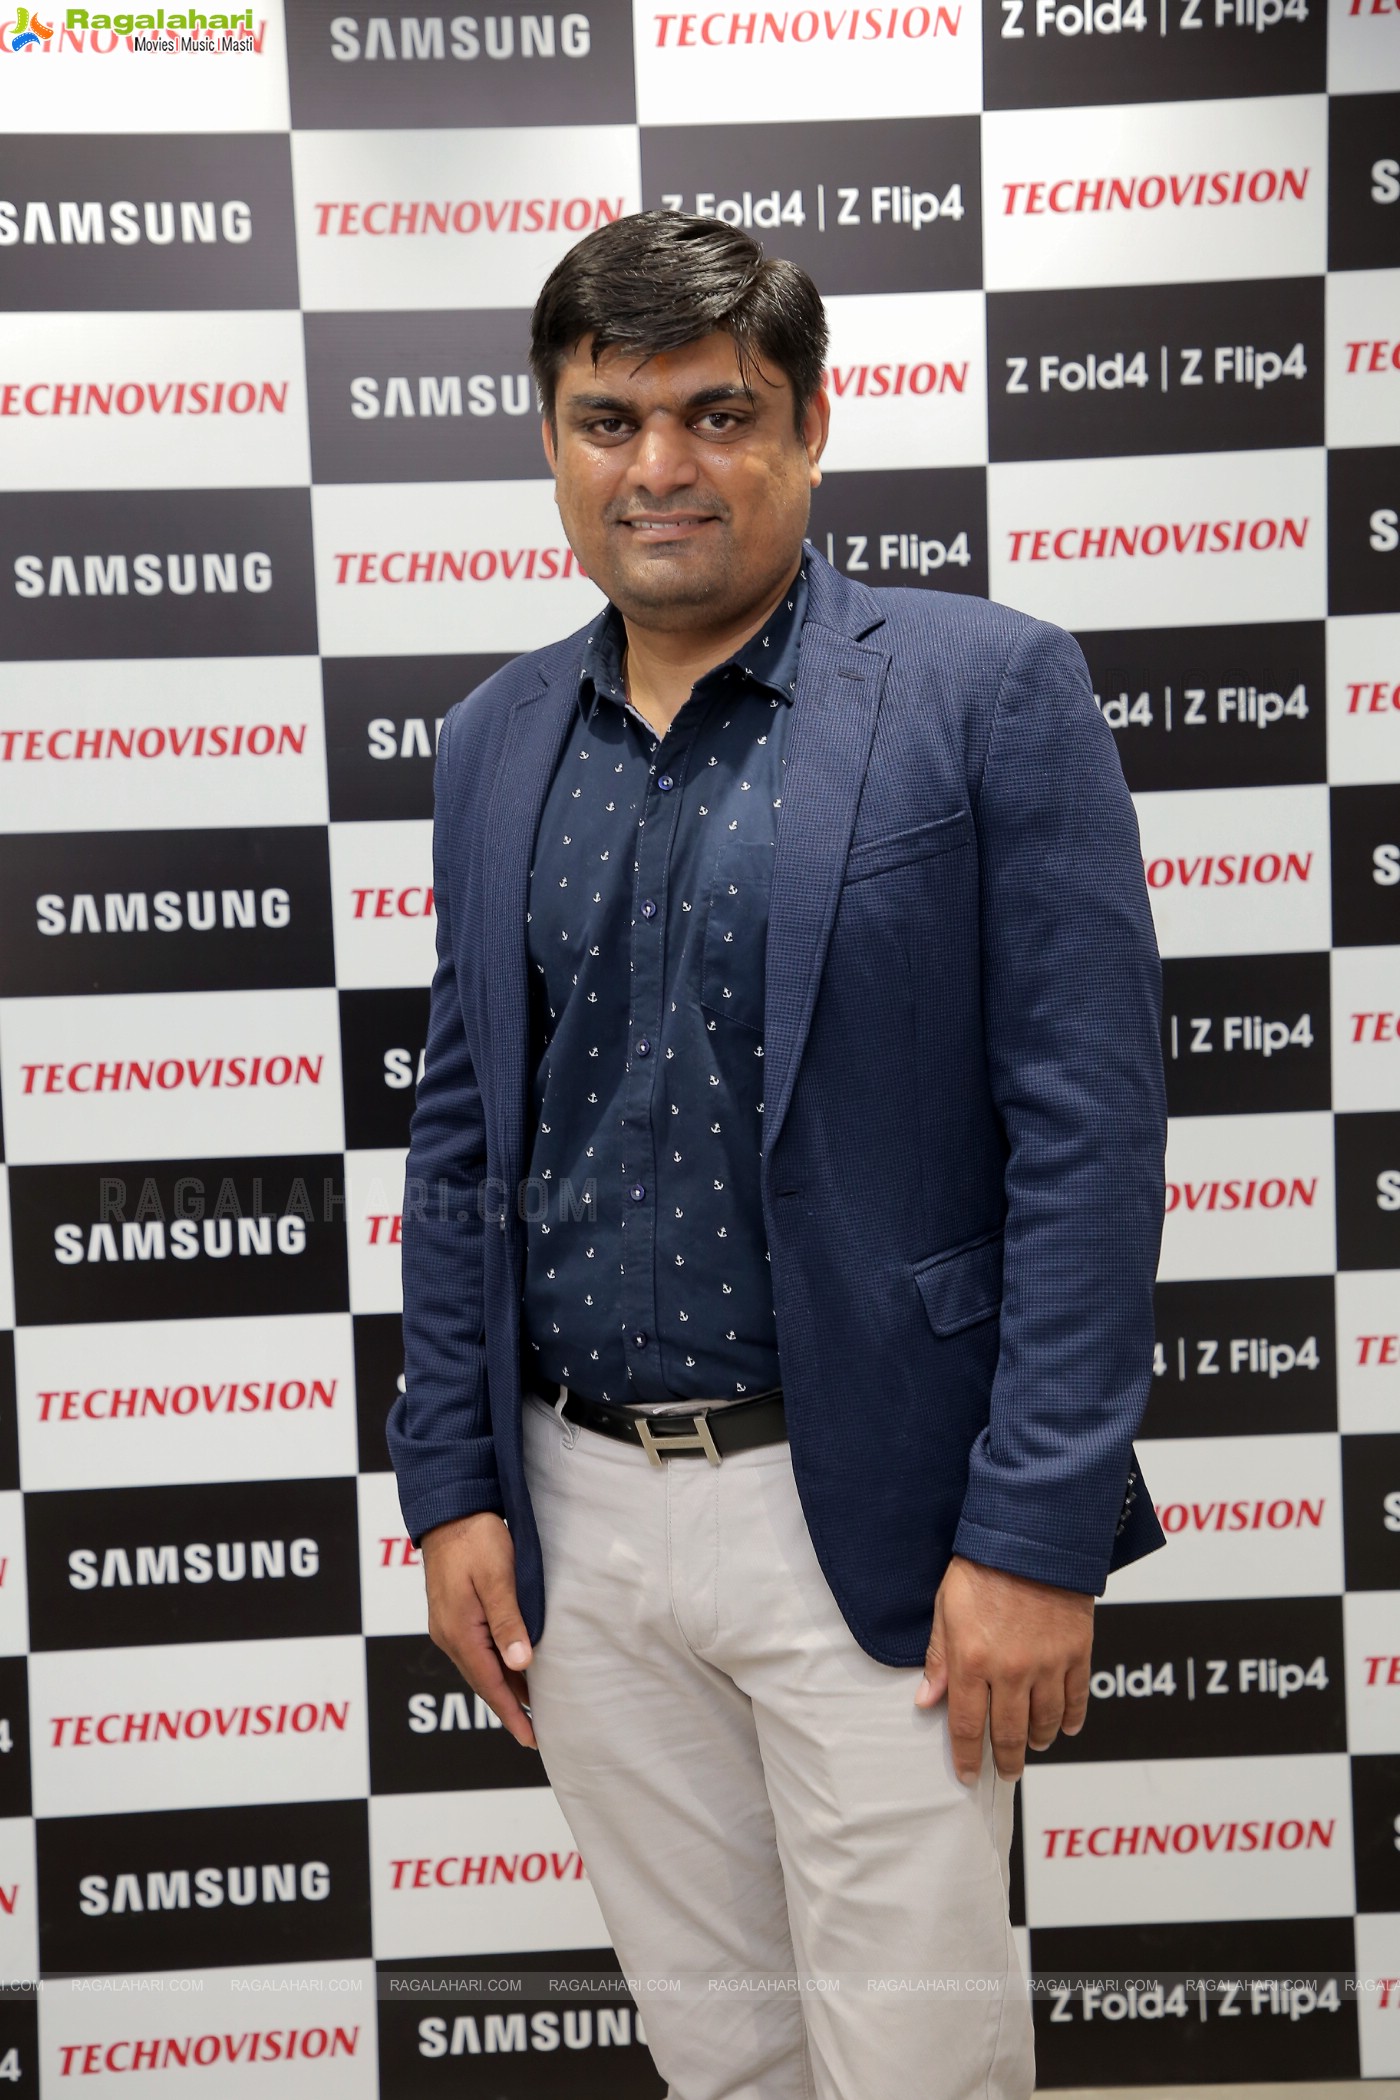 All New Samsung Z Fold 4 & Z Flip 4 Smartphone Launch at Technovision Mobiles, Banjara Hills,Hyderabad